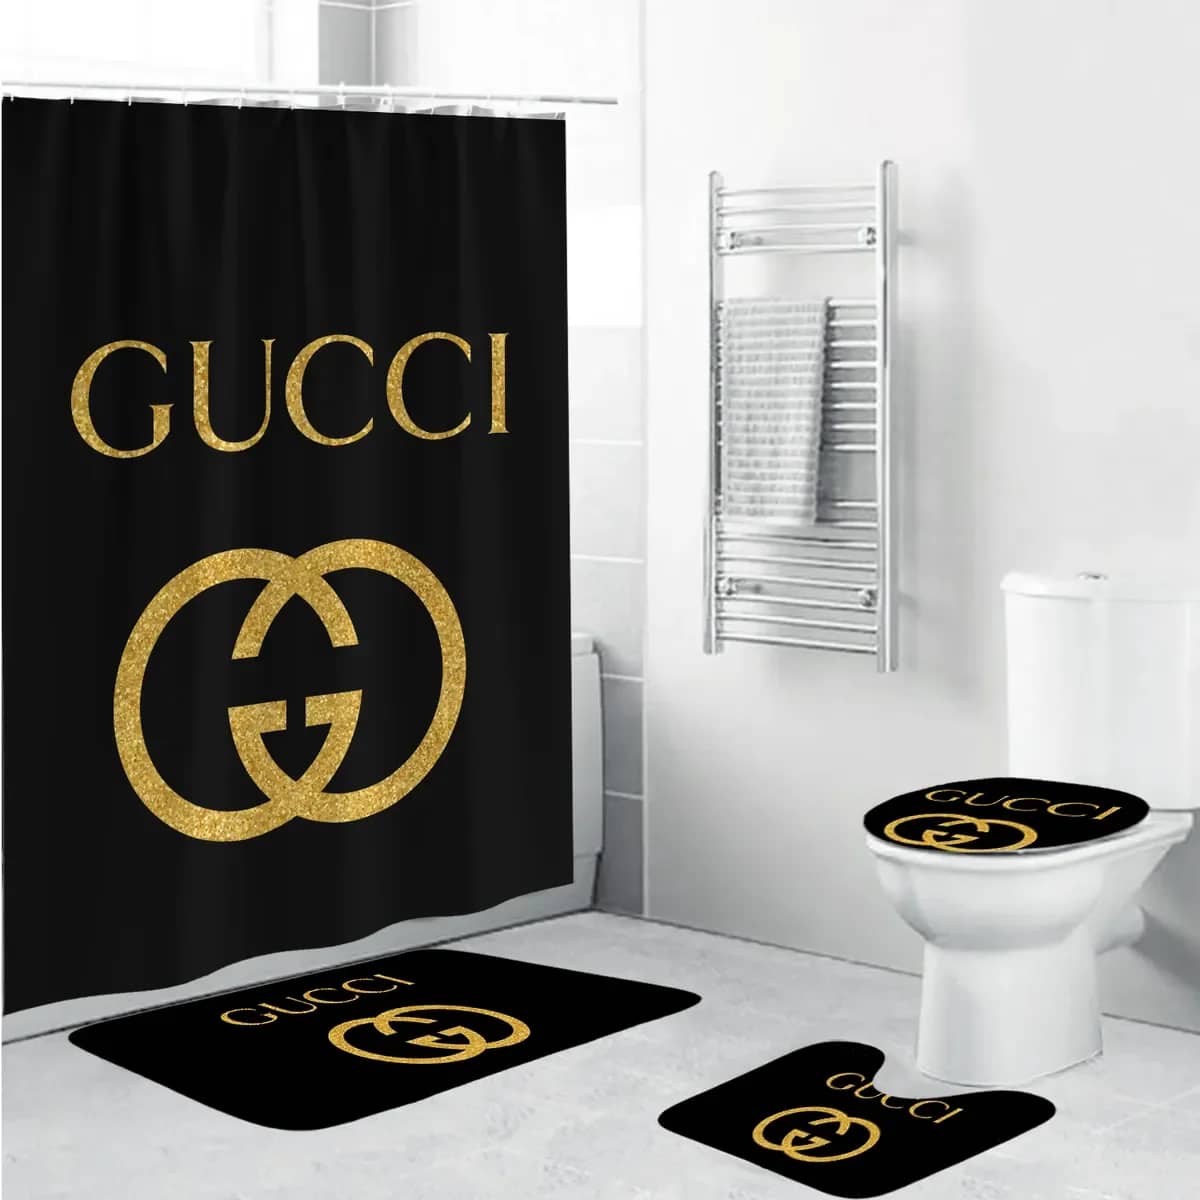 Gucci Black Golden Logo Luxury Brand Premium Bathroom Sets